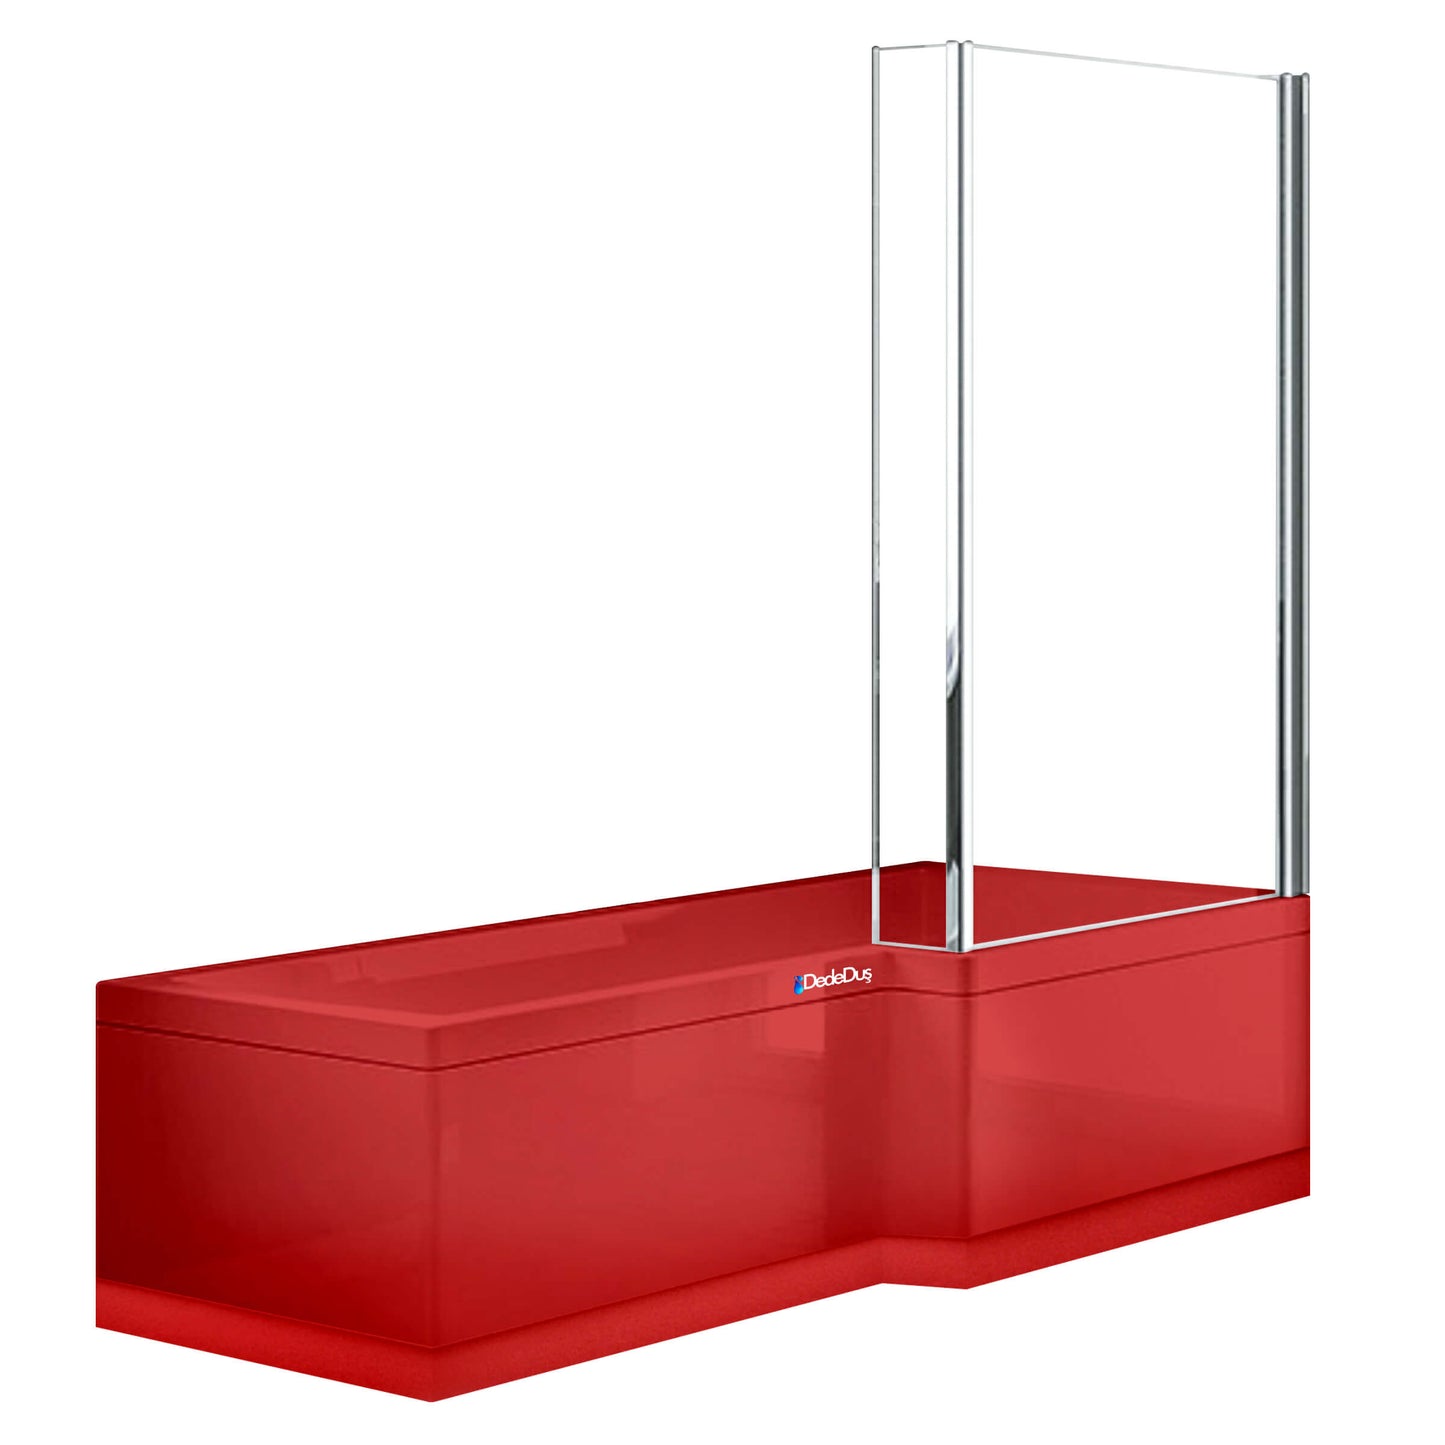 kırmızı L tipi 70x85x170 cm özel küvet jakuzi, Mod Buca, Dede Duş, İçel